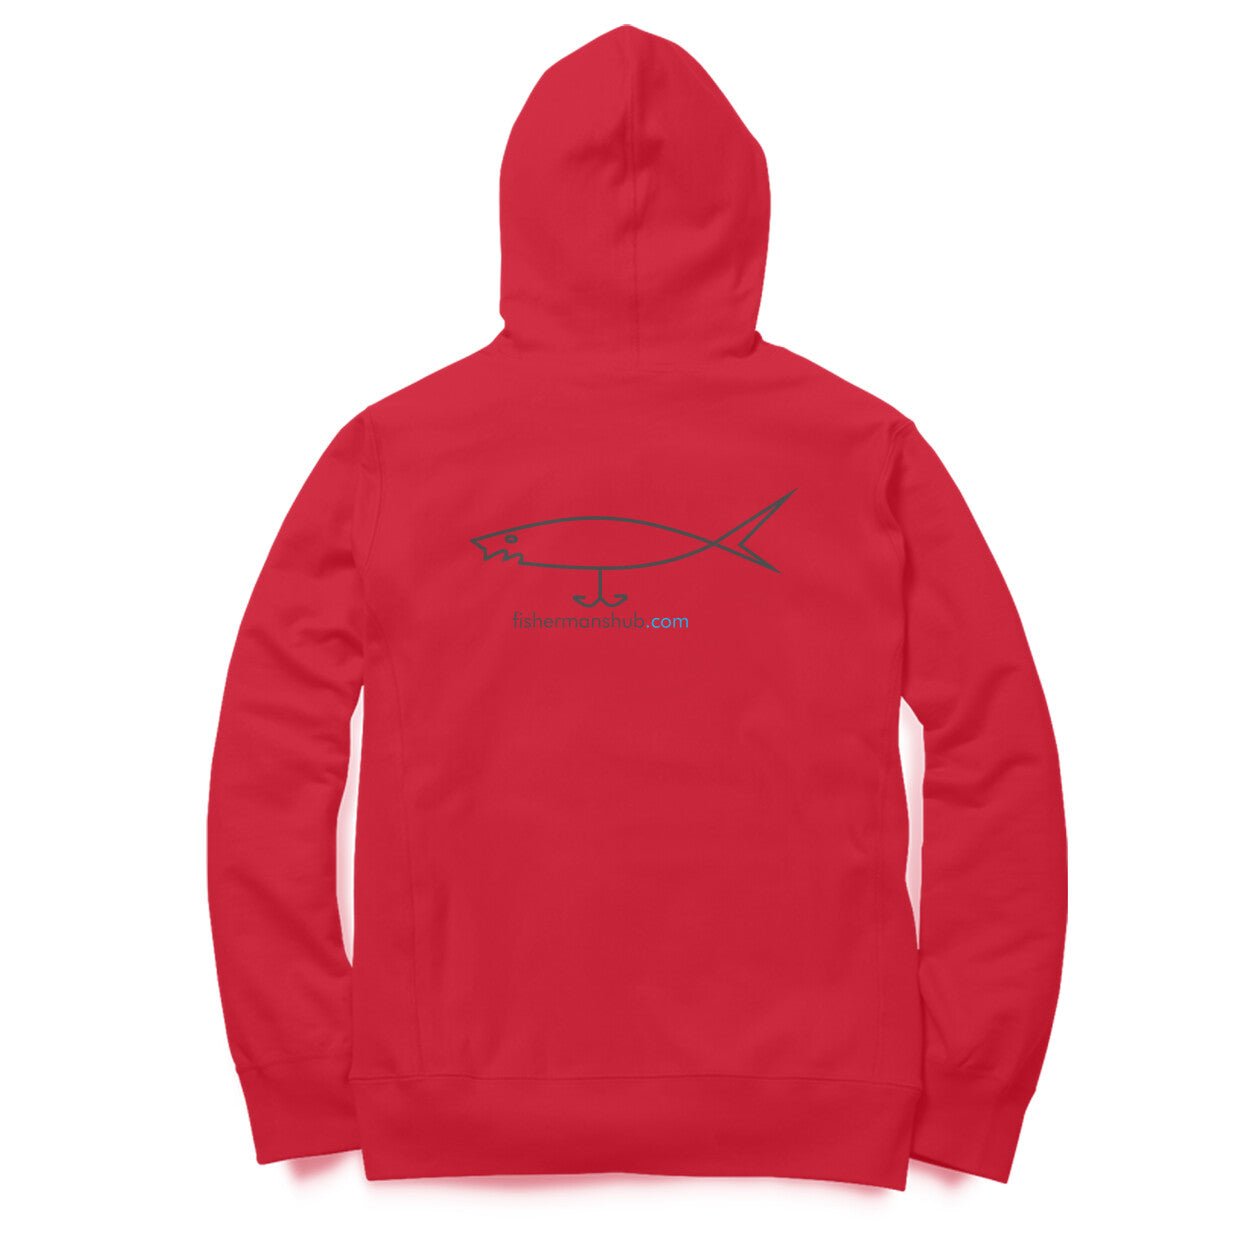 Mens / Woman's Angling टोपी वाला स्वेटर | सामने मछली + पीछेfishermanshub.com लोगो| Hoodie